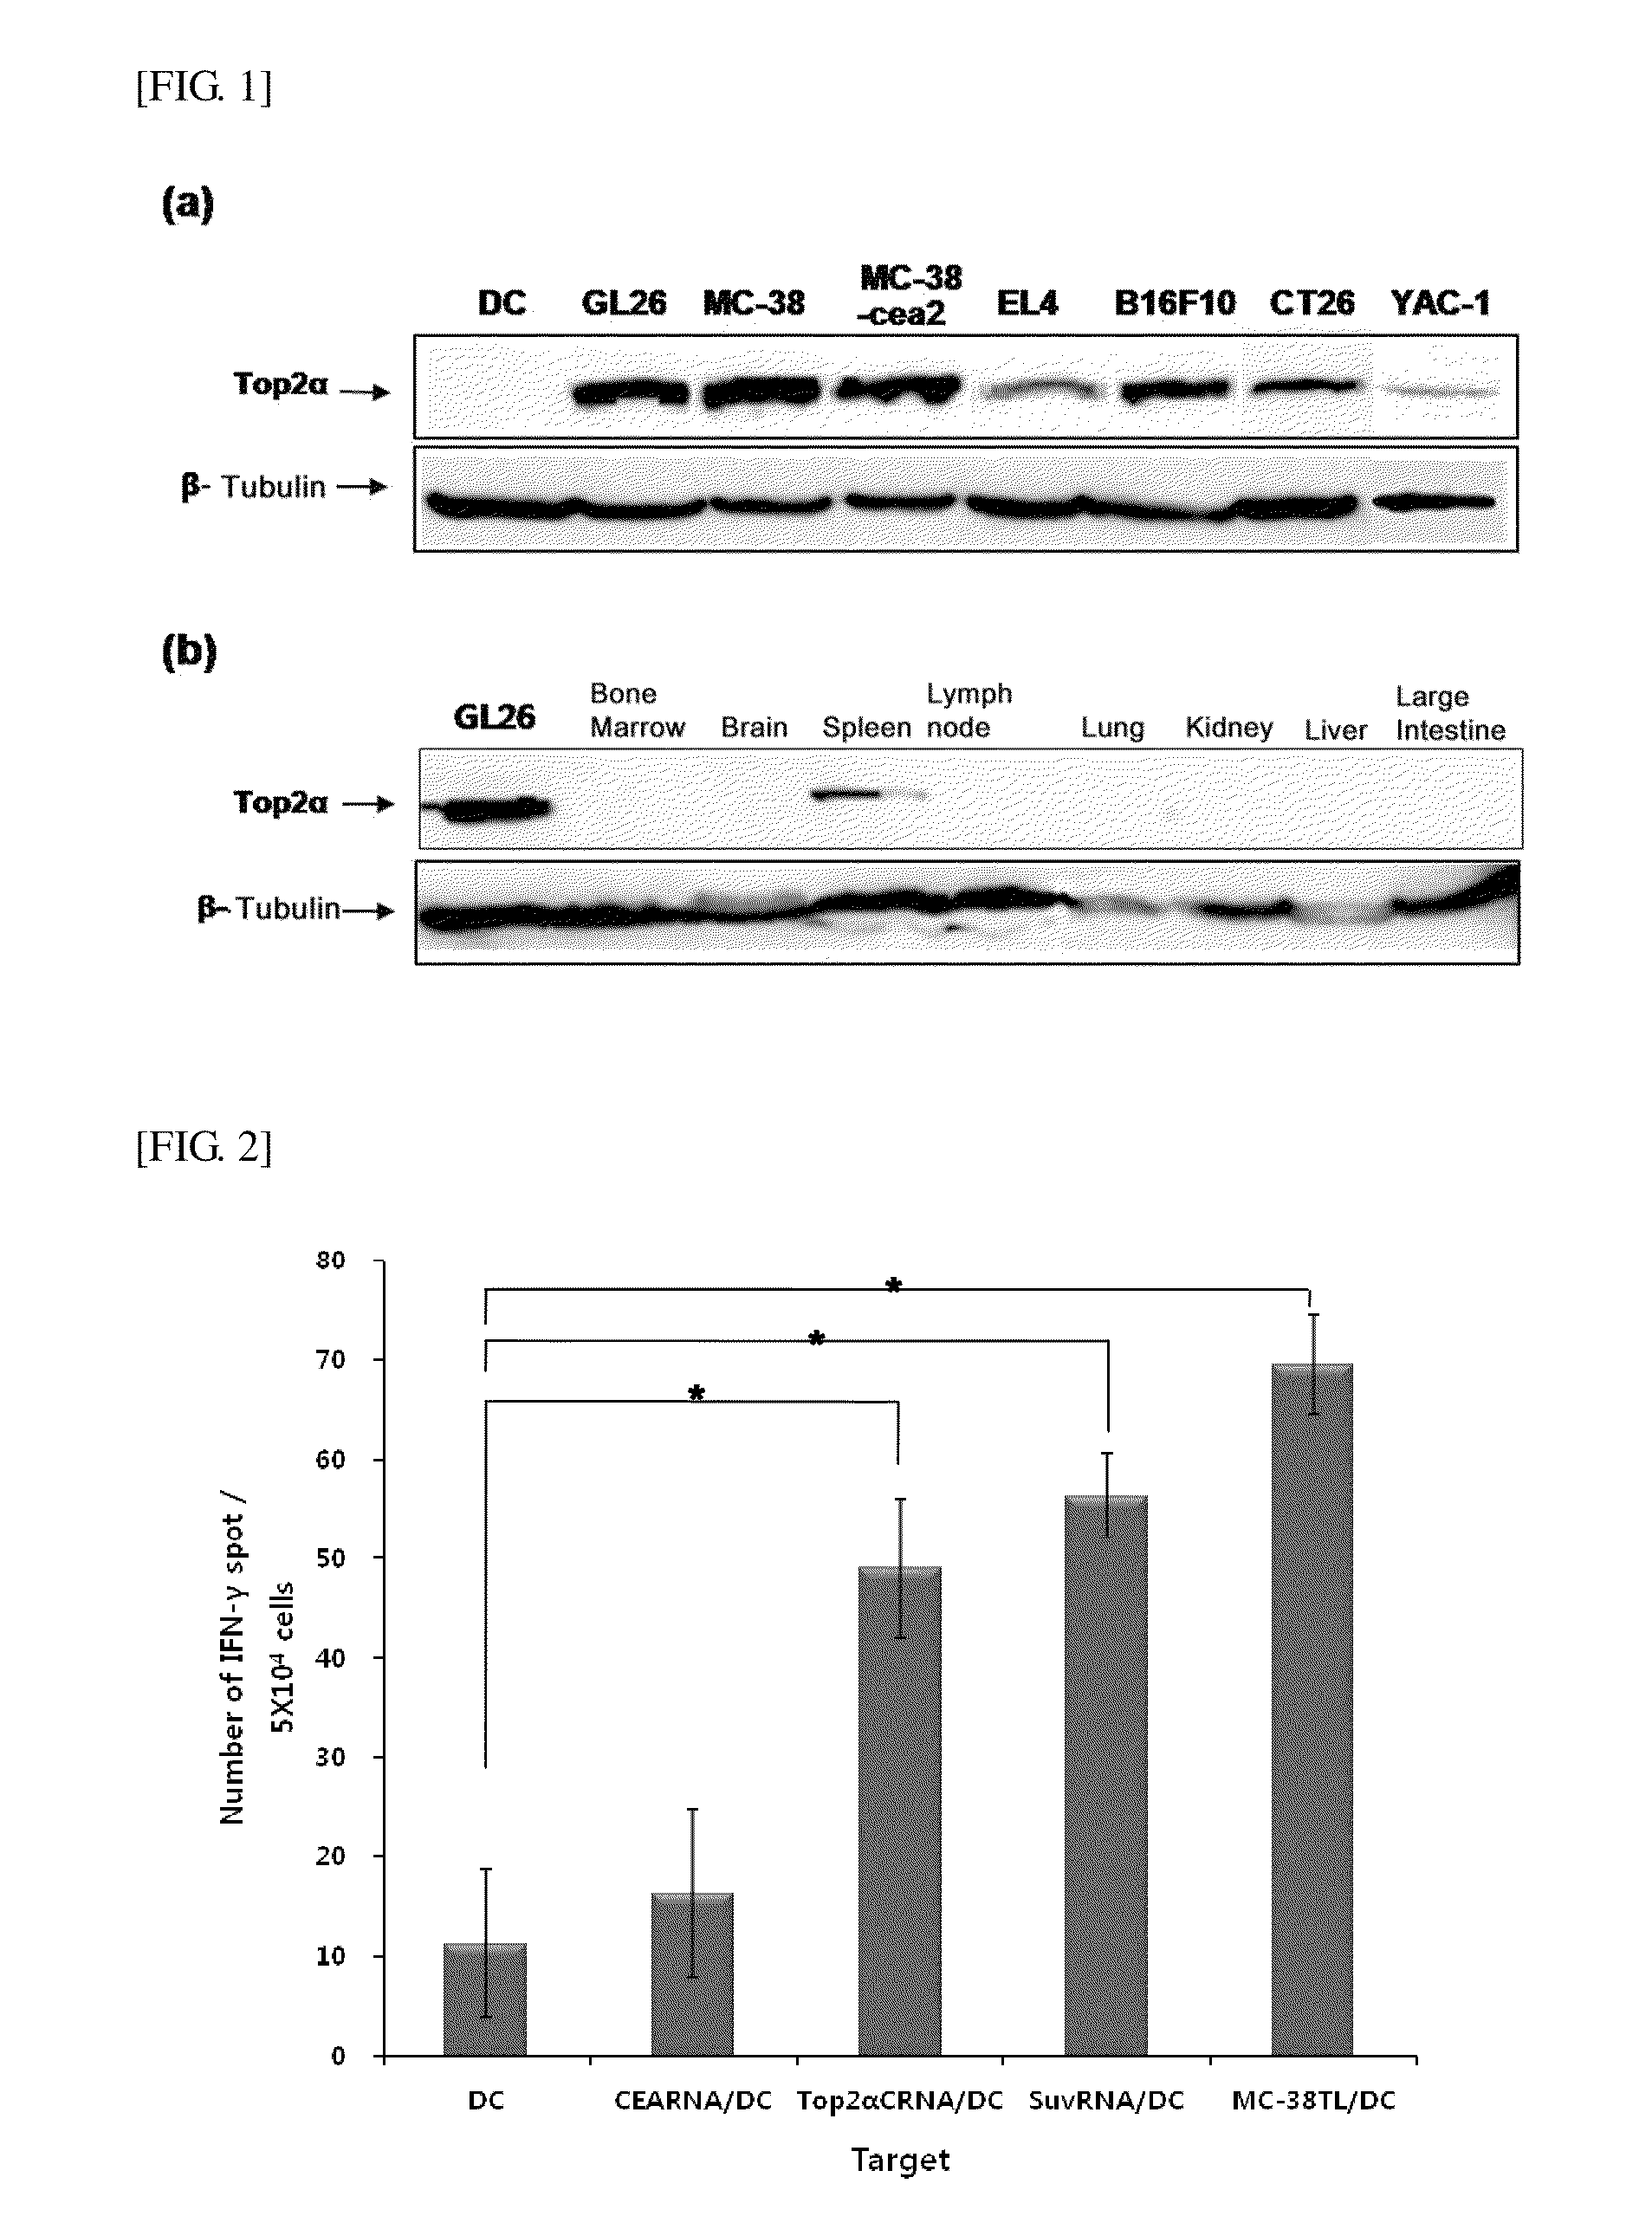 Tumor Antigen Protein, Gene, or Peptides from Topoisimerase 2 Alpha